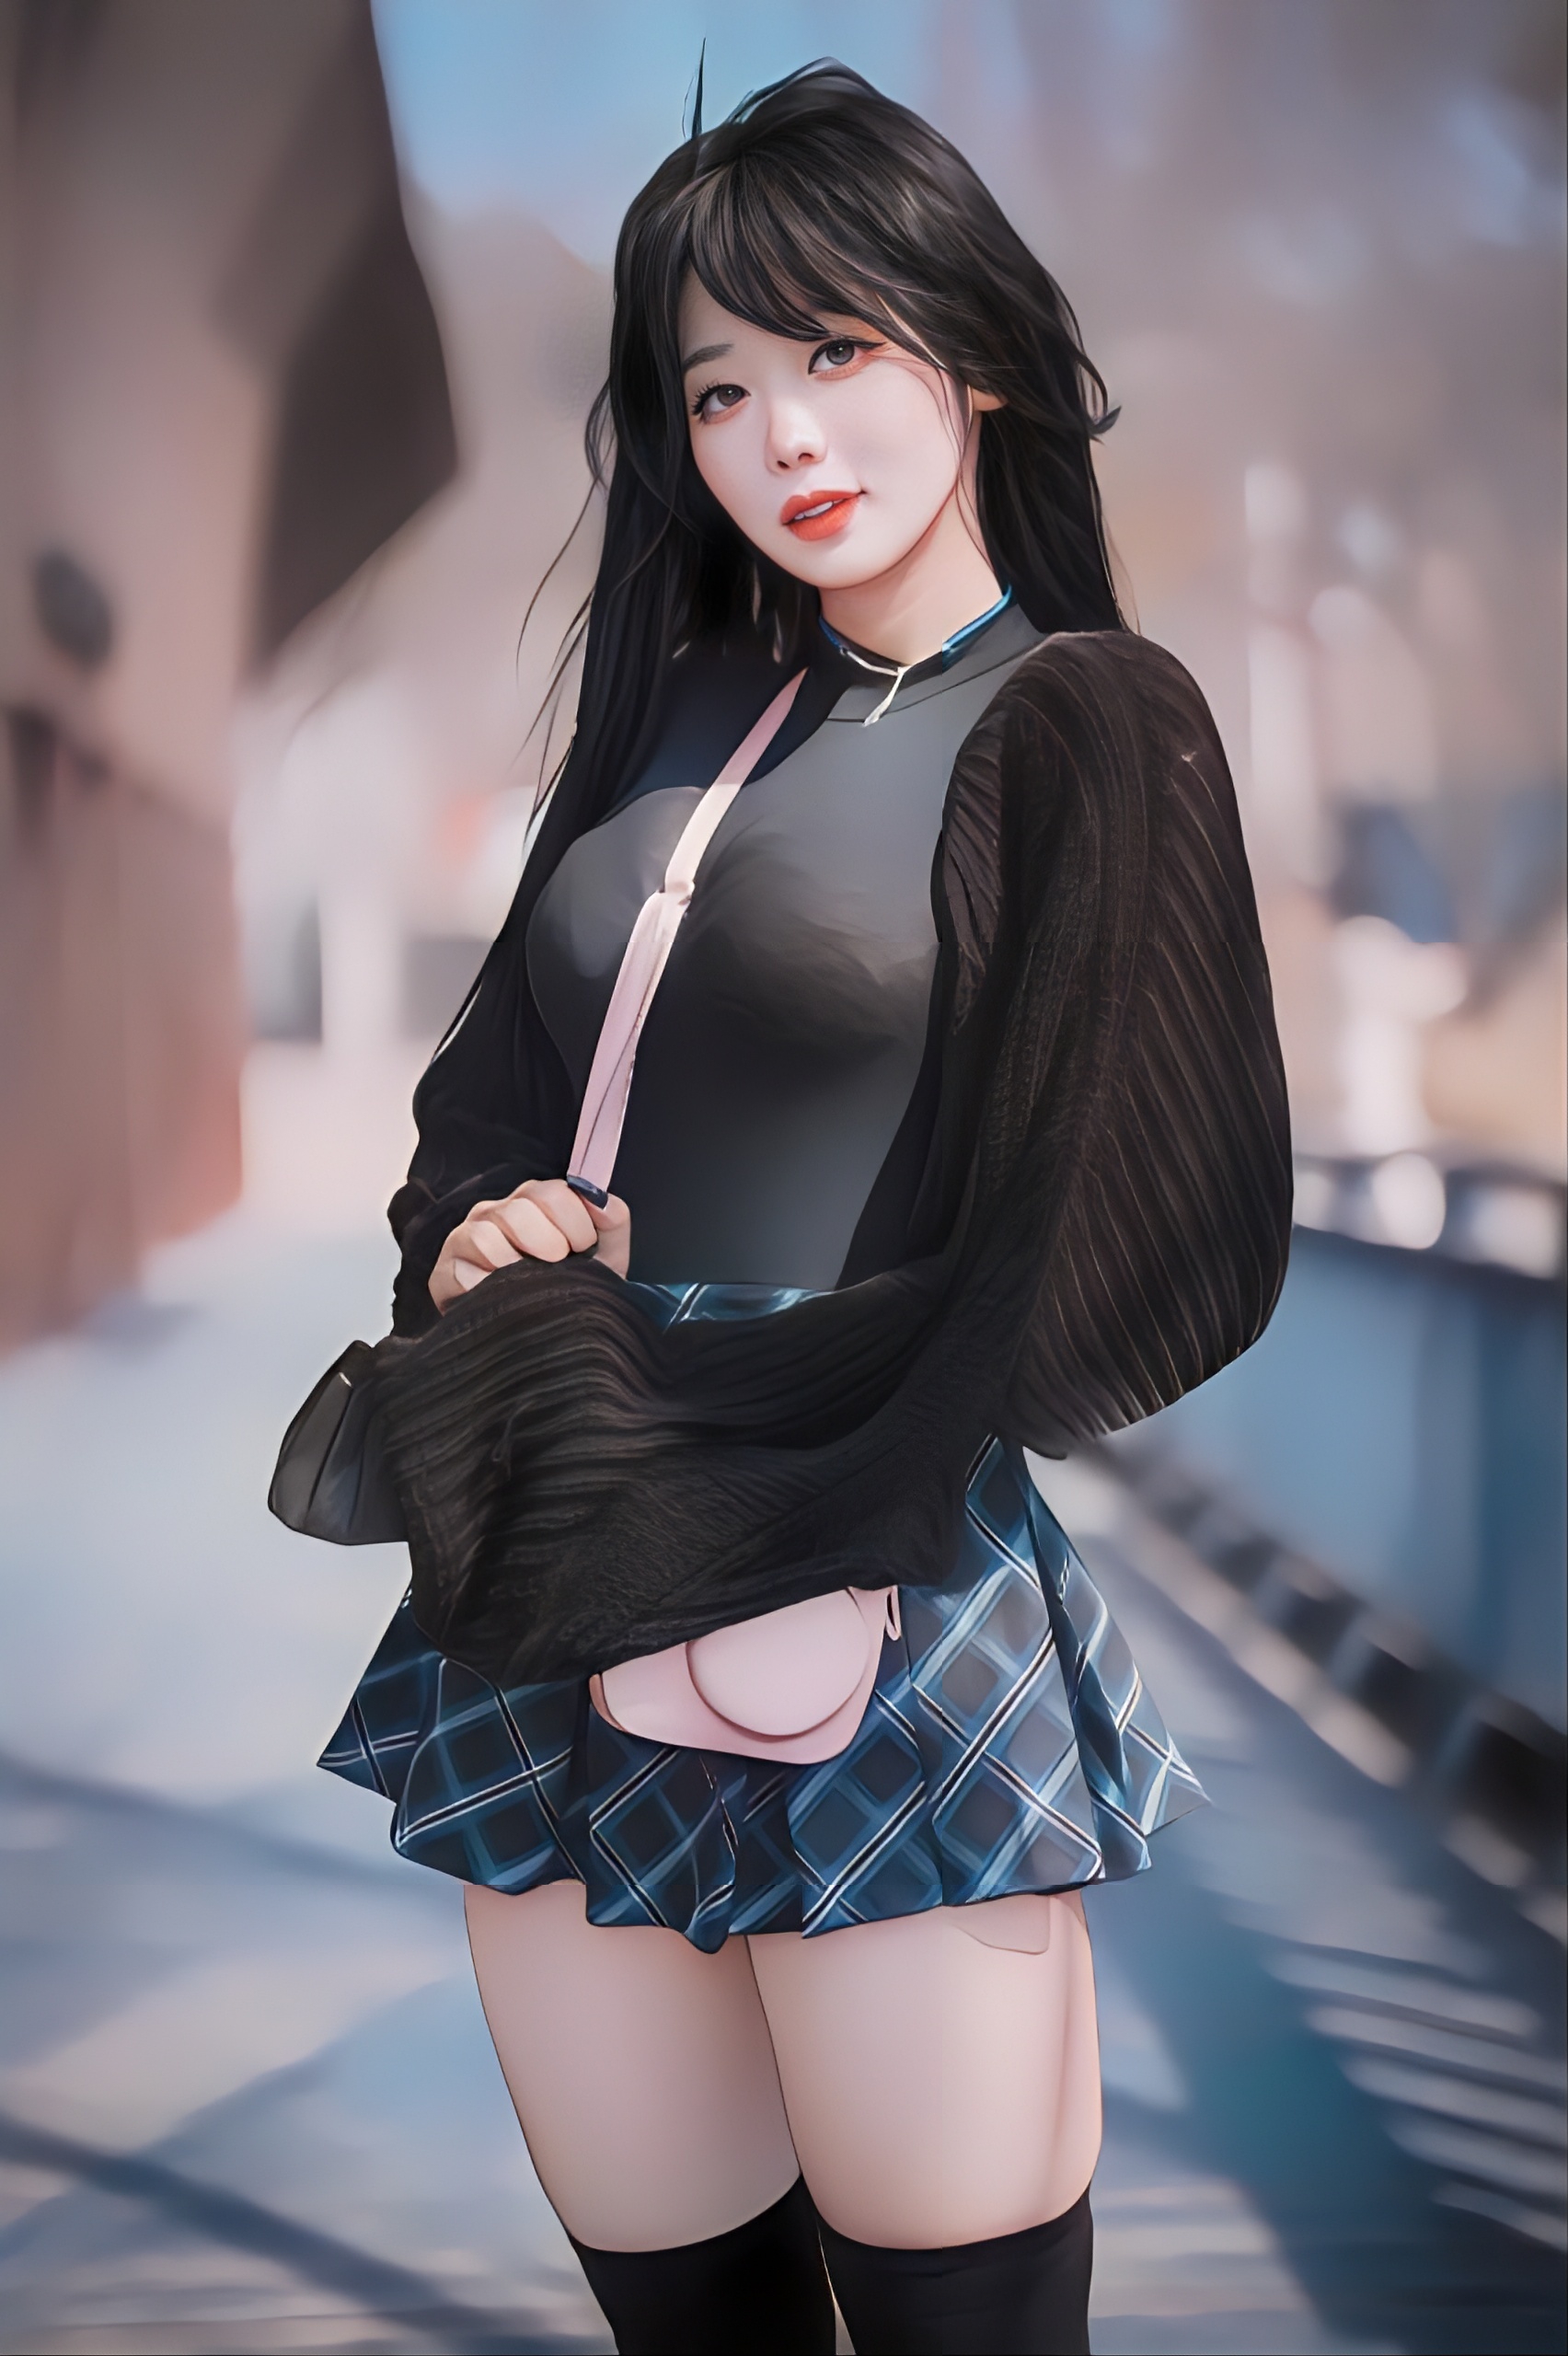 General 1704x2560 model bokeh Asian thighs skirt women Zia Kwon portrait display purse photoshopped AI art